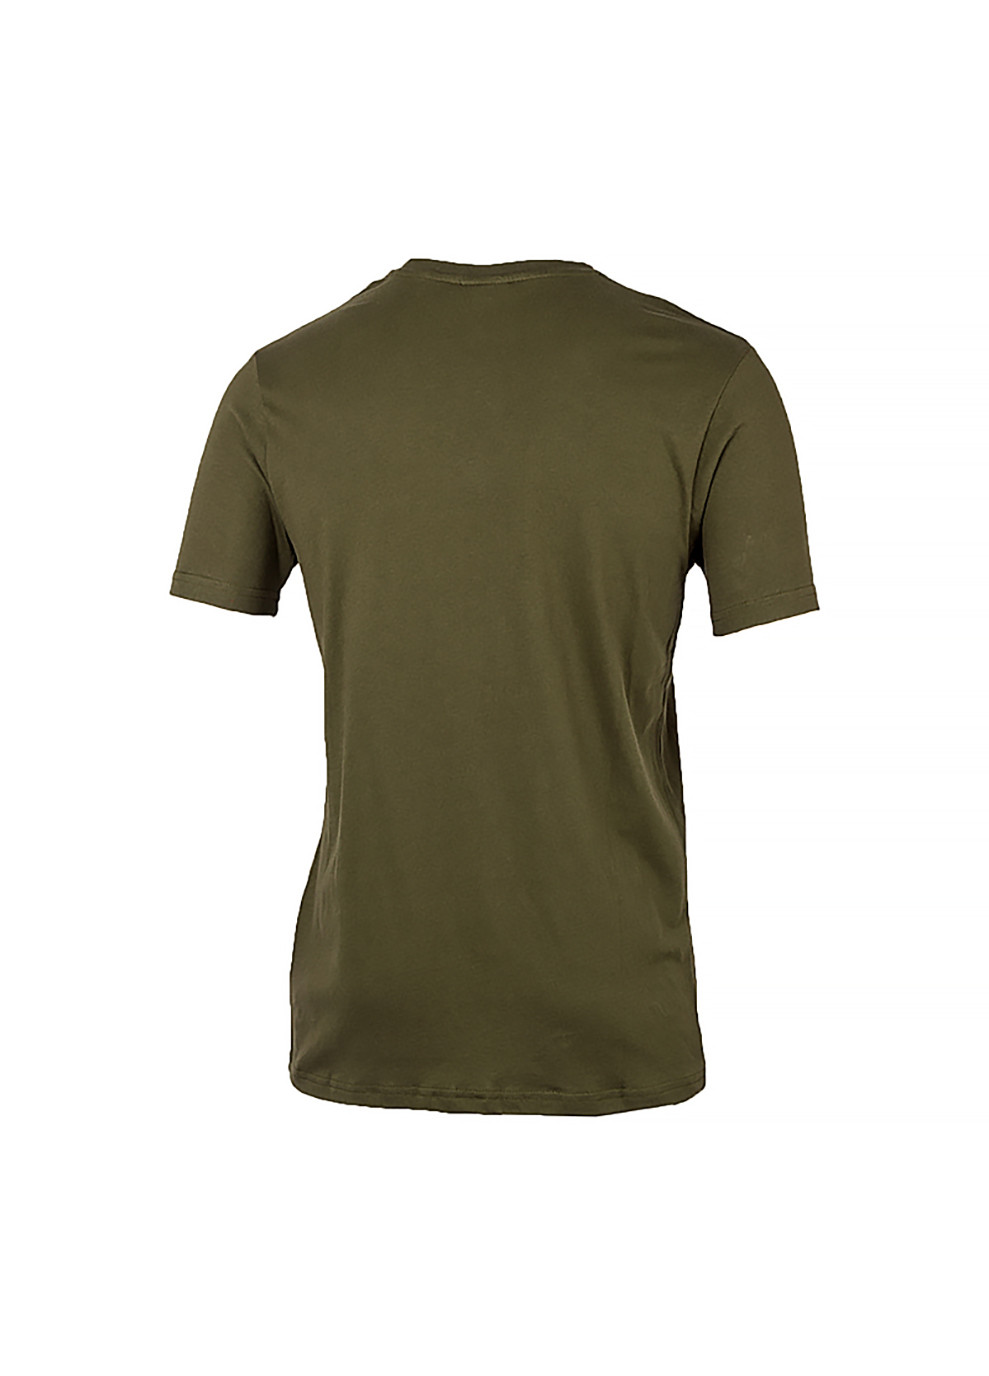 Хаки (оливковая) мужская футболка sl prado хаки l (shc07405-khaki l) Ellesse